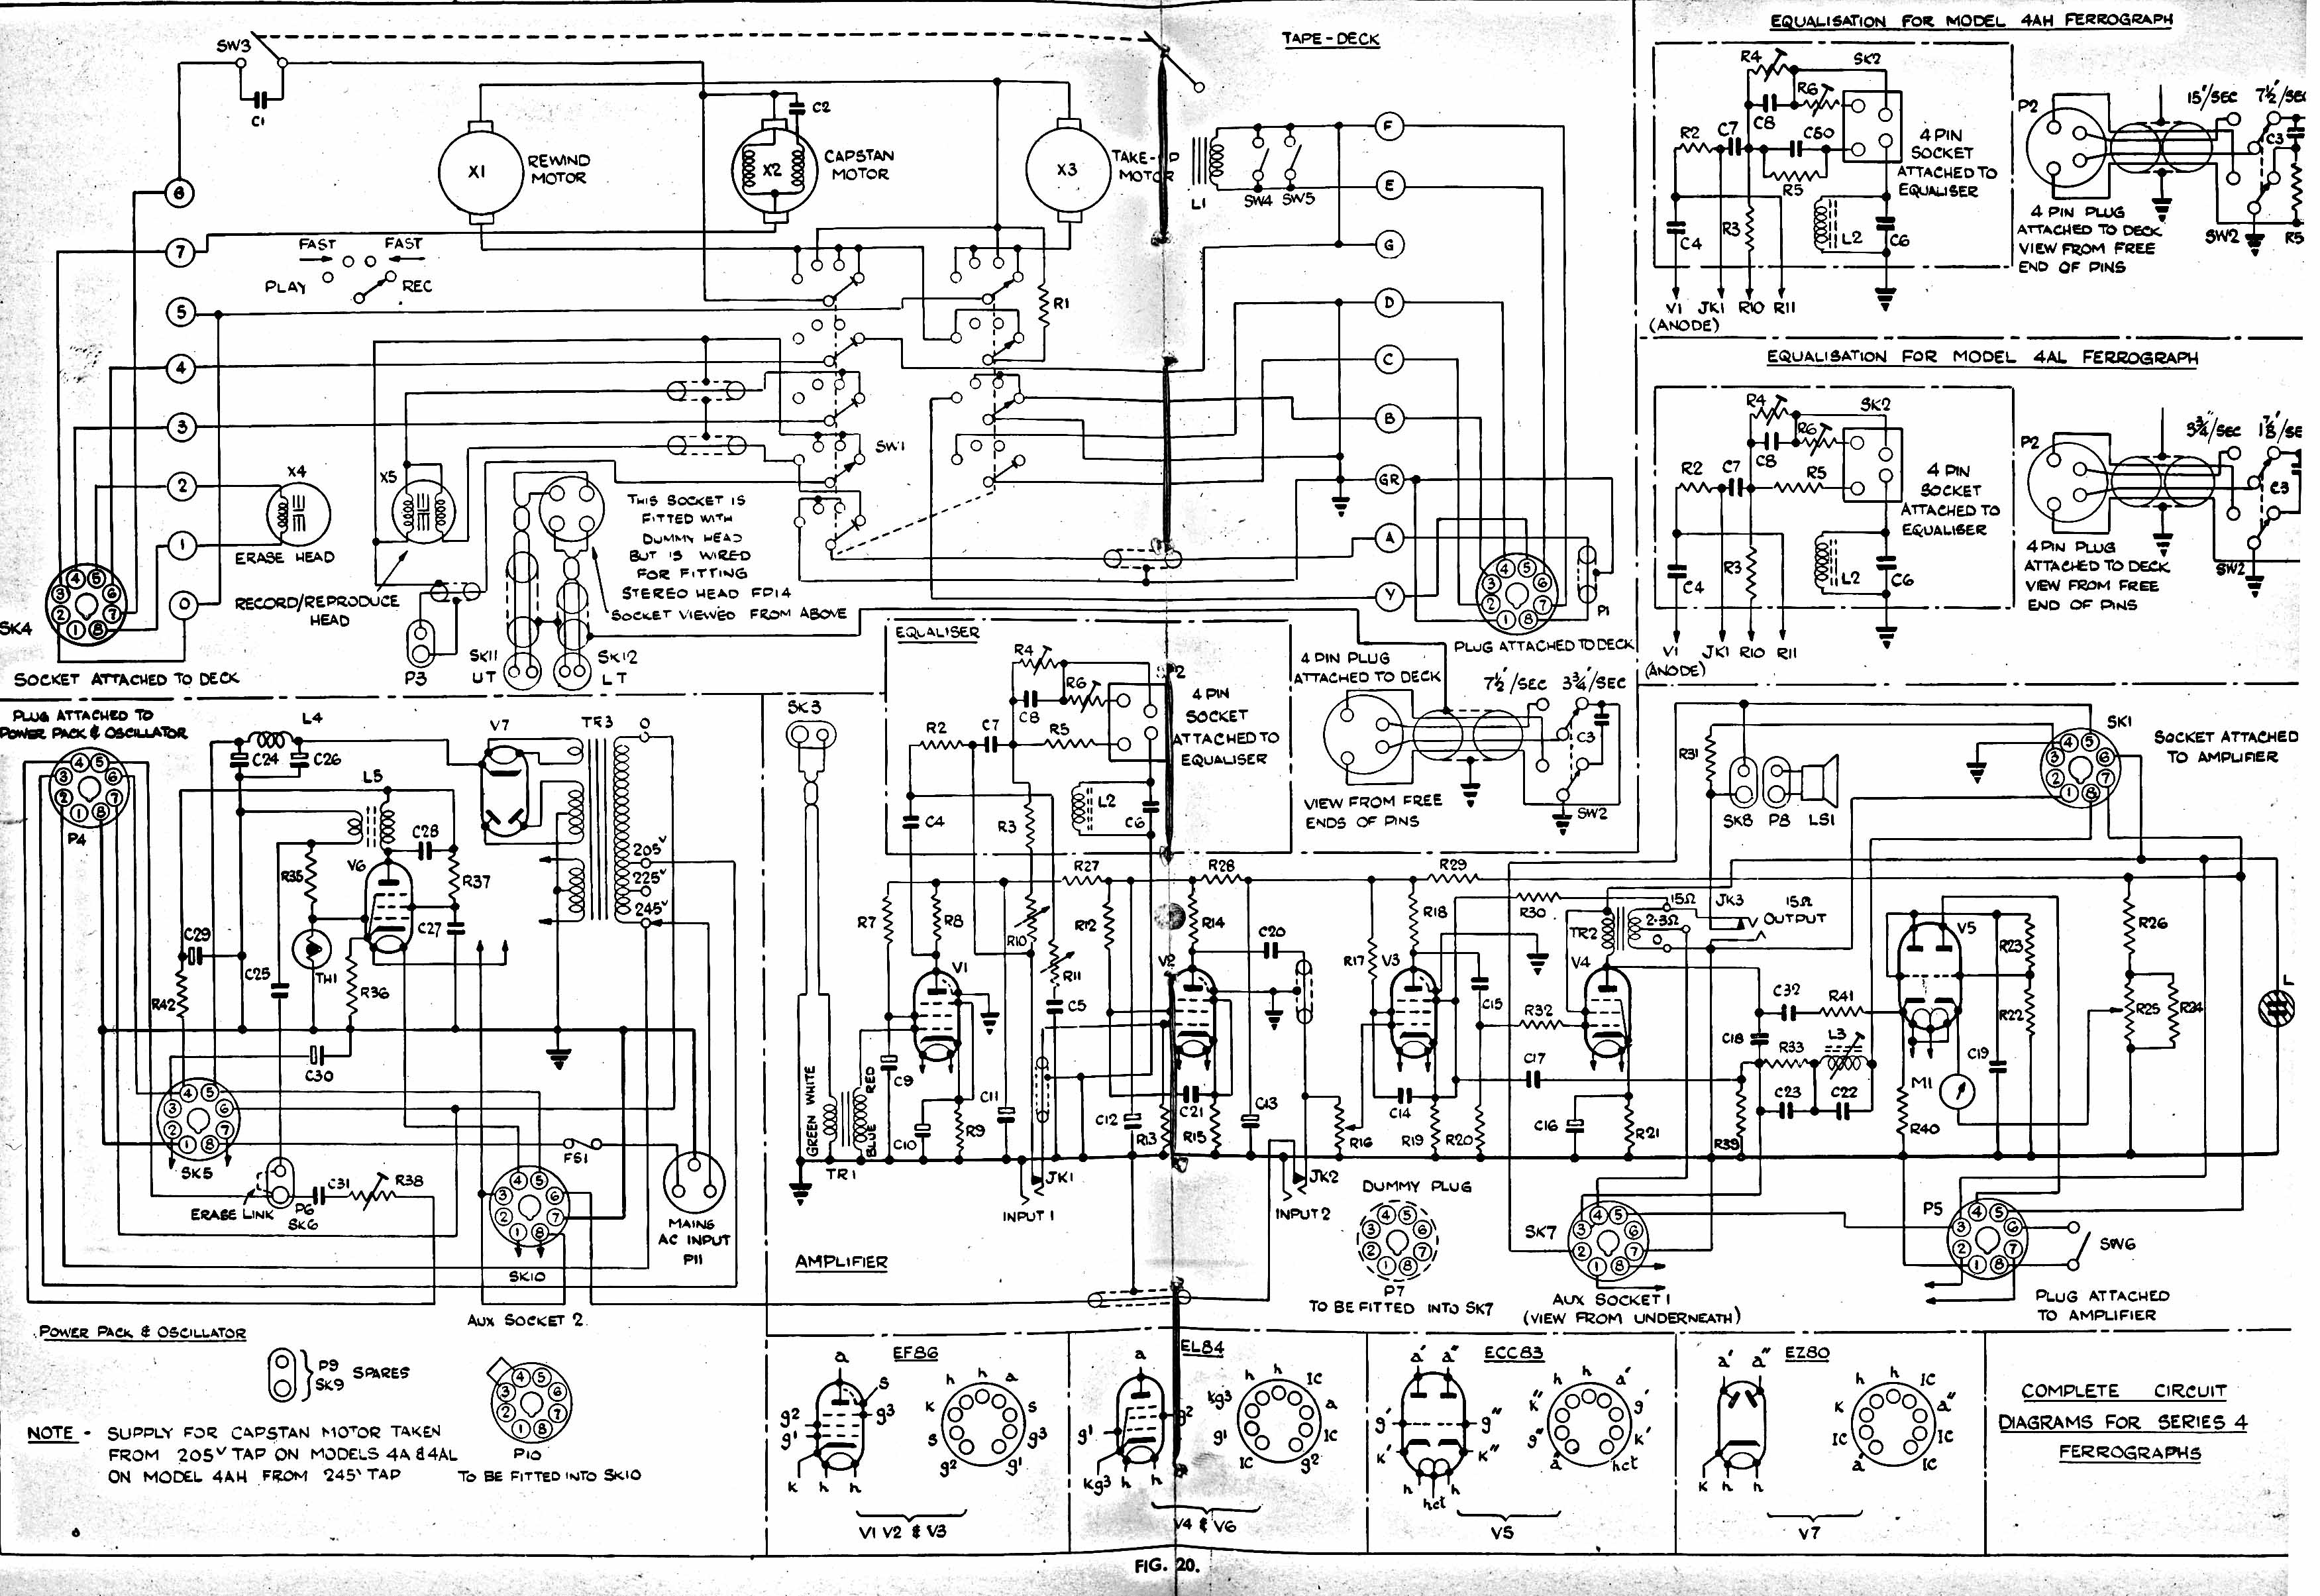 Ferrograph Series 4 Circuit Diagram.